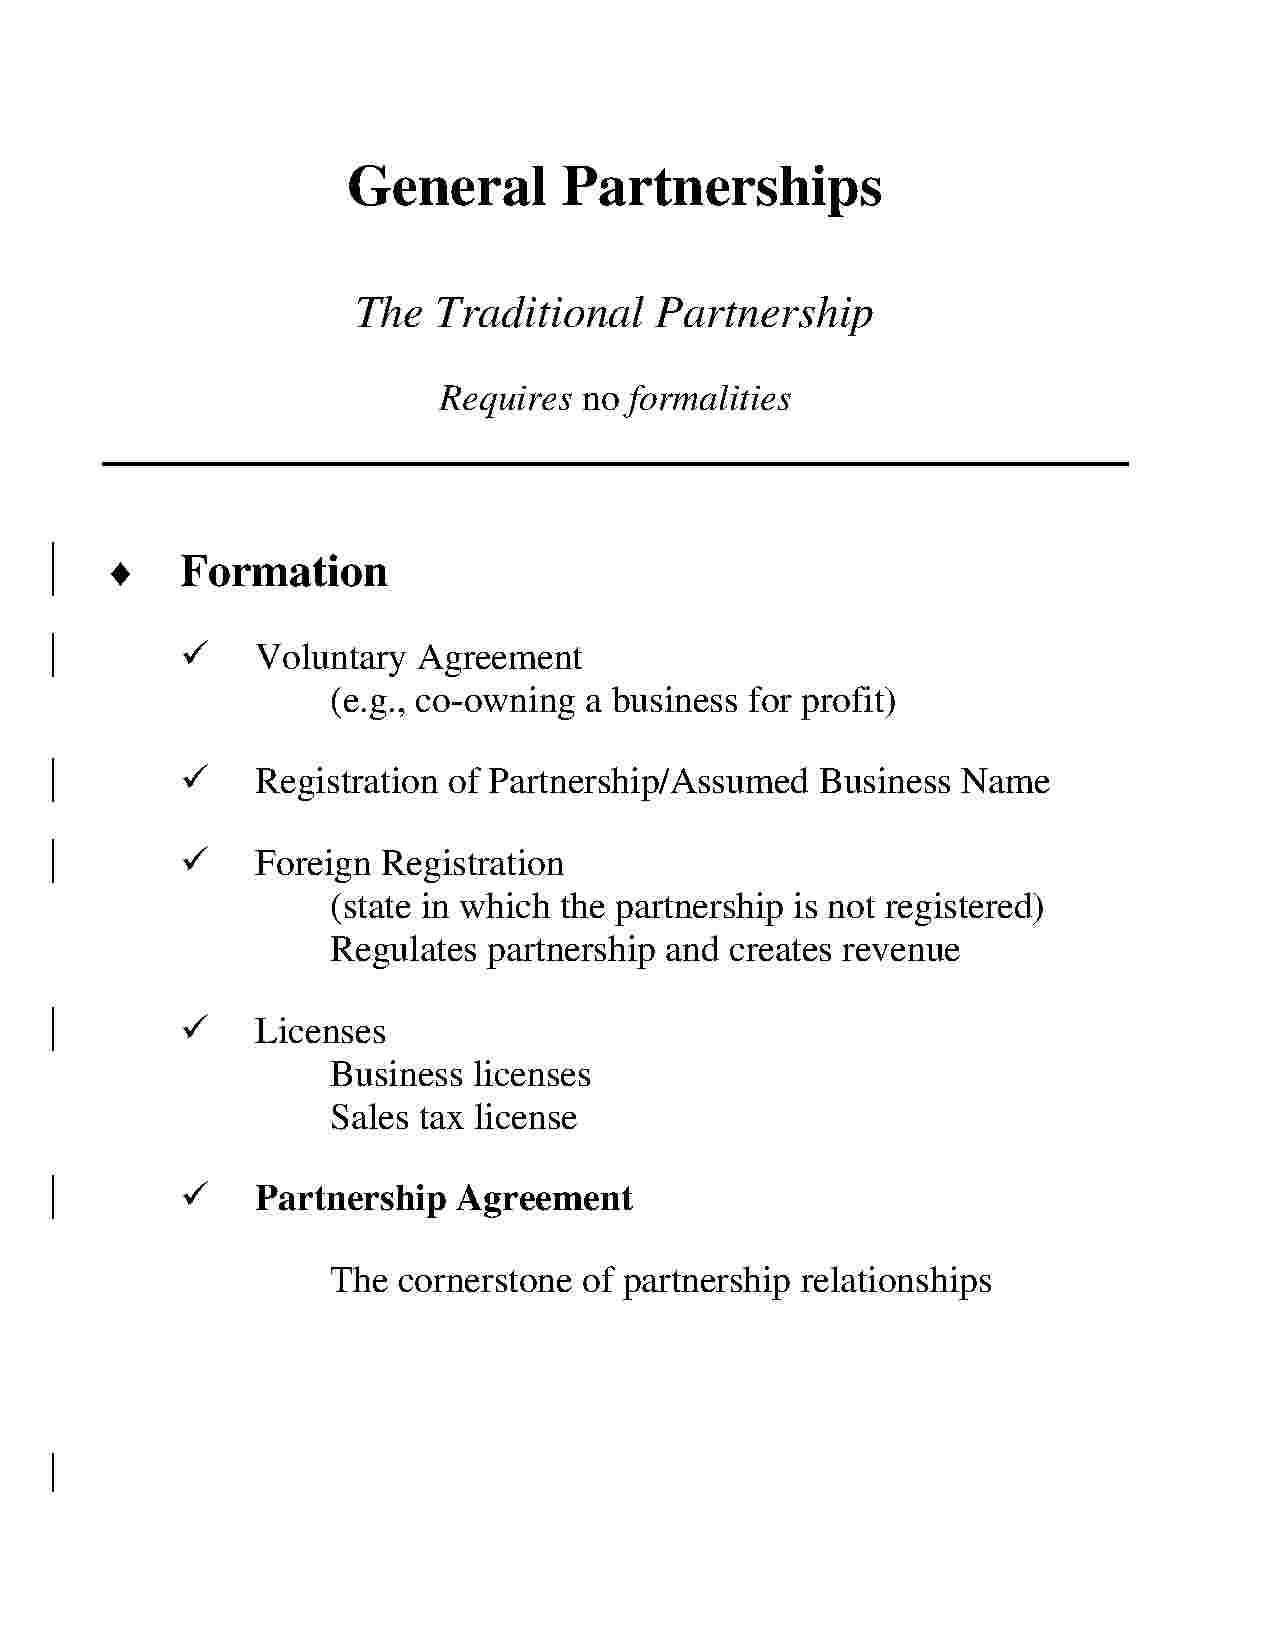 General Partnership Operating Agreement Assignment Of Partnership Interest Templates Hunter